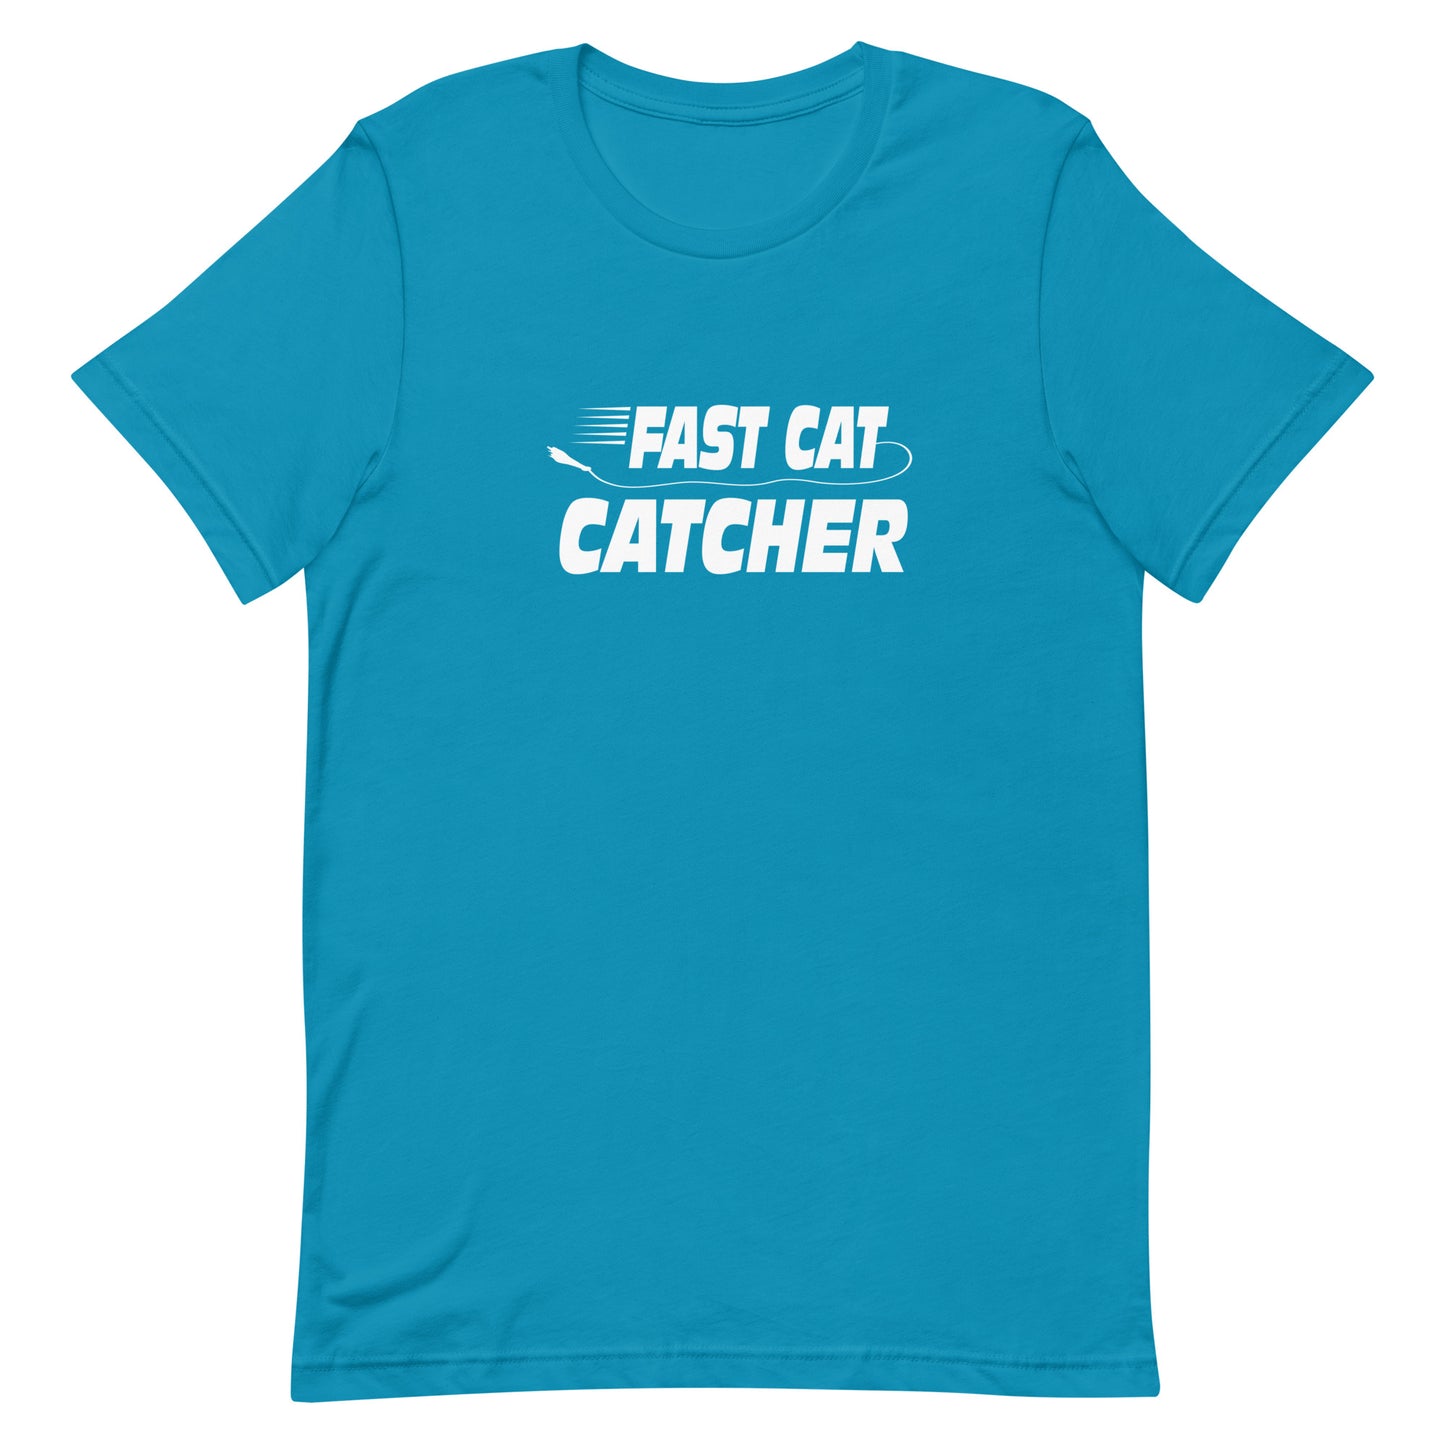 FAST CAT CATCHER - Unisex t-shirt